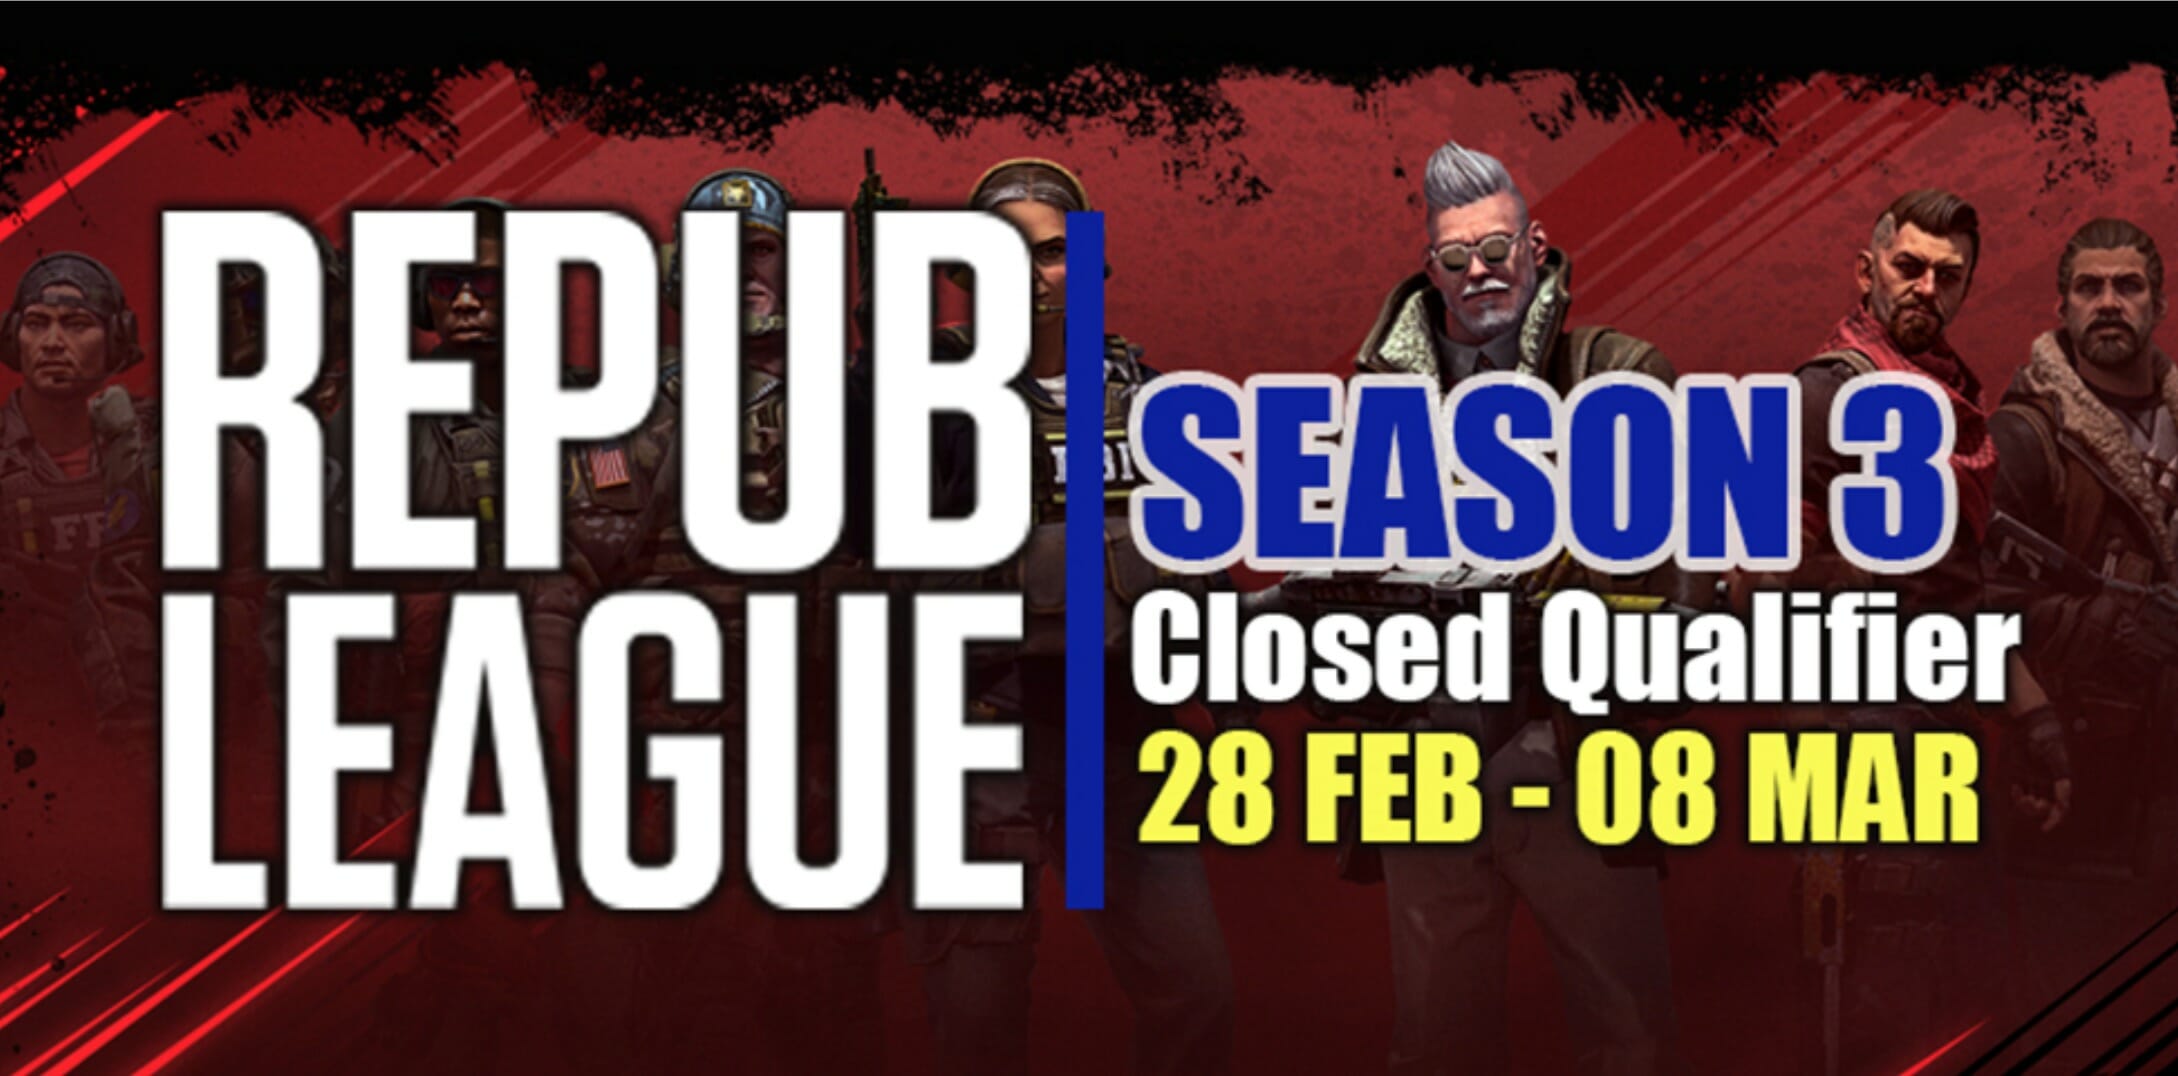 REPUBLEAGUE Season 3 Closed Qualifier